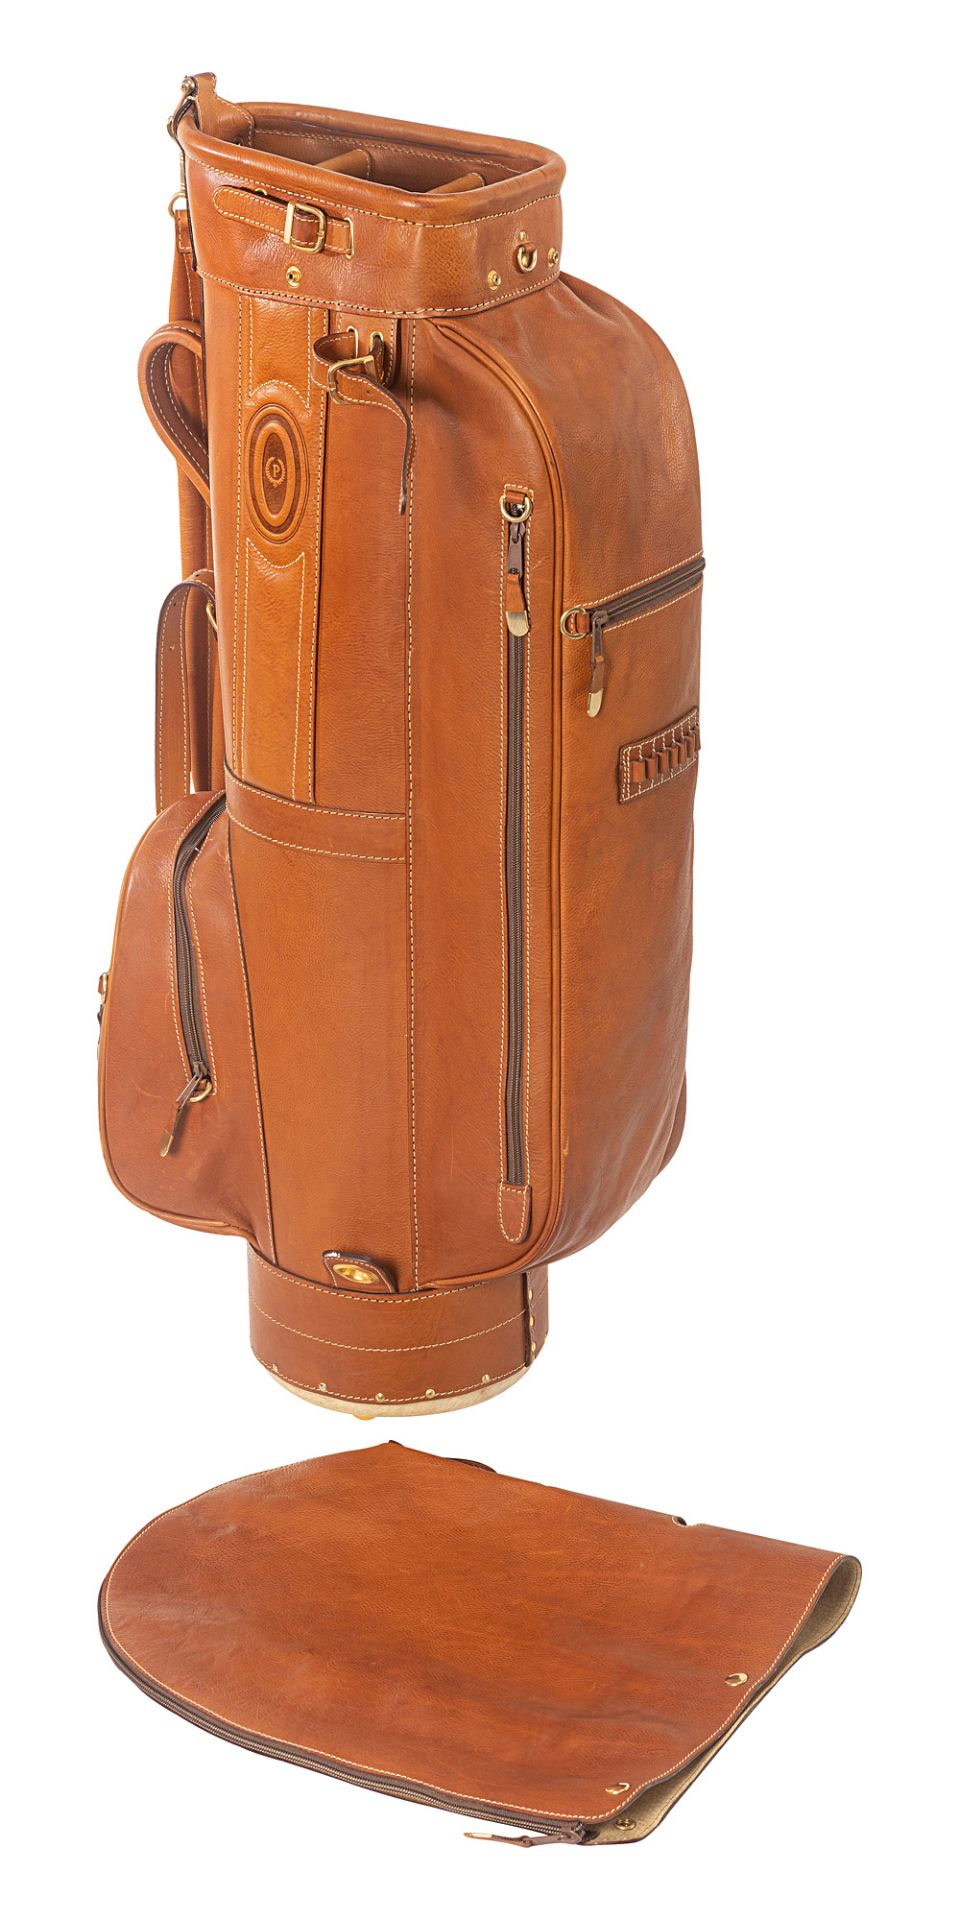 Pollini vintage leather golf bag - Image 4 of 4